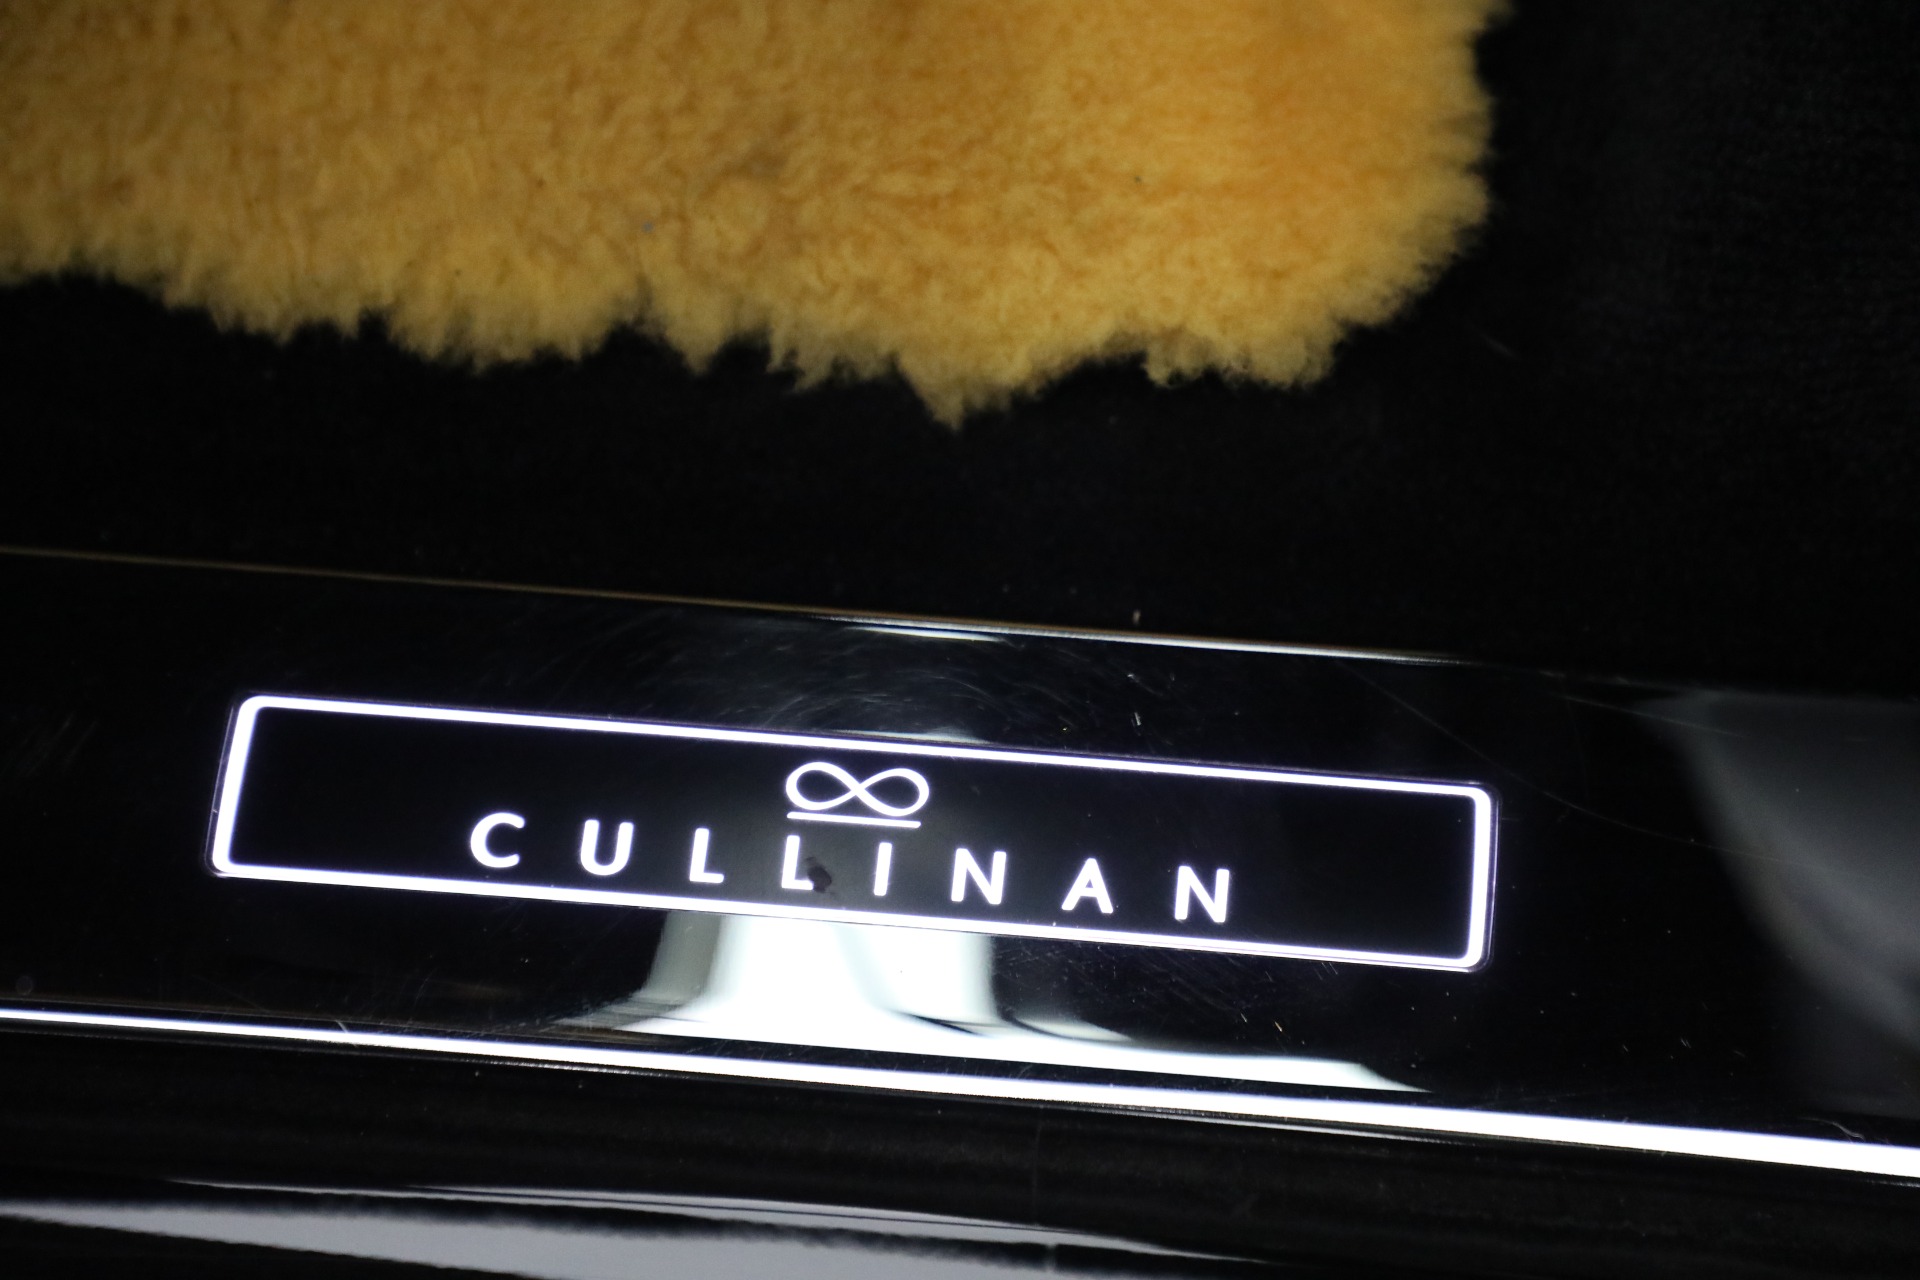 Used 2020 Rolls Royce Cullinan Black Badge